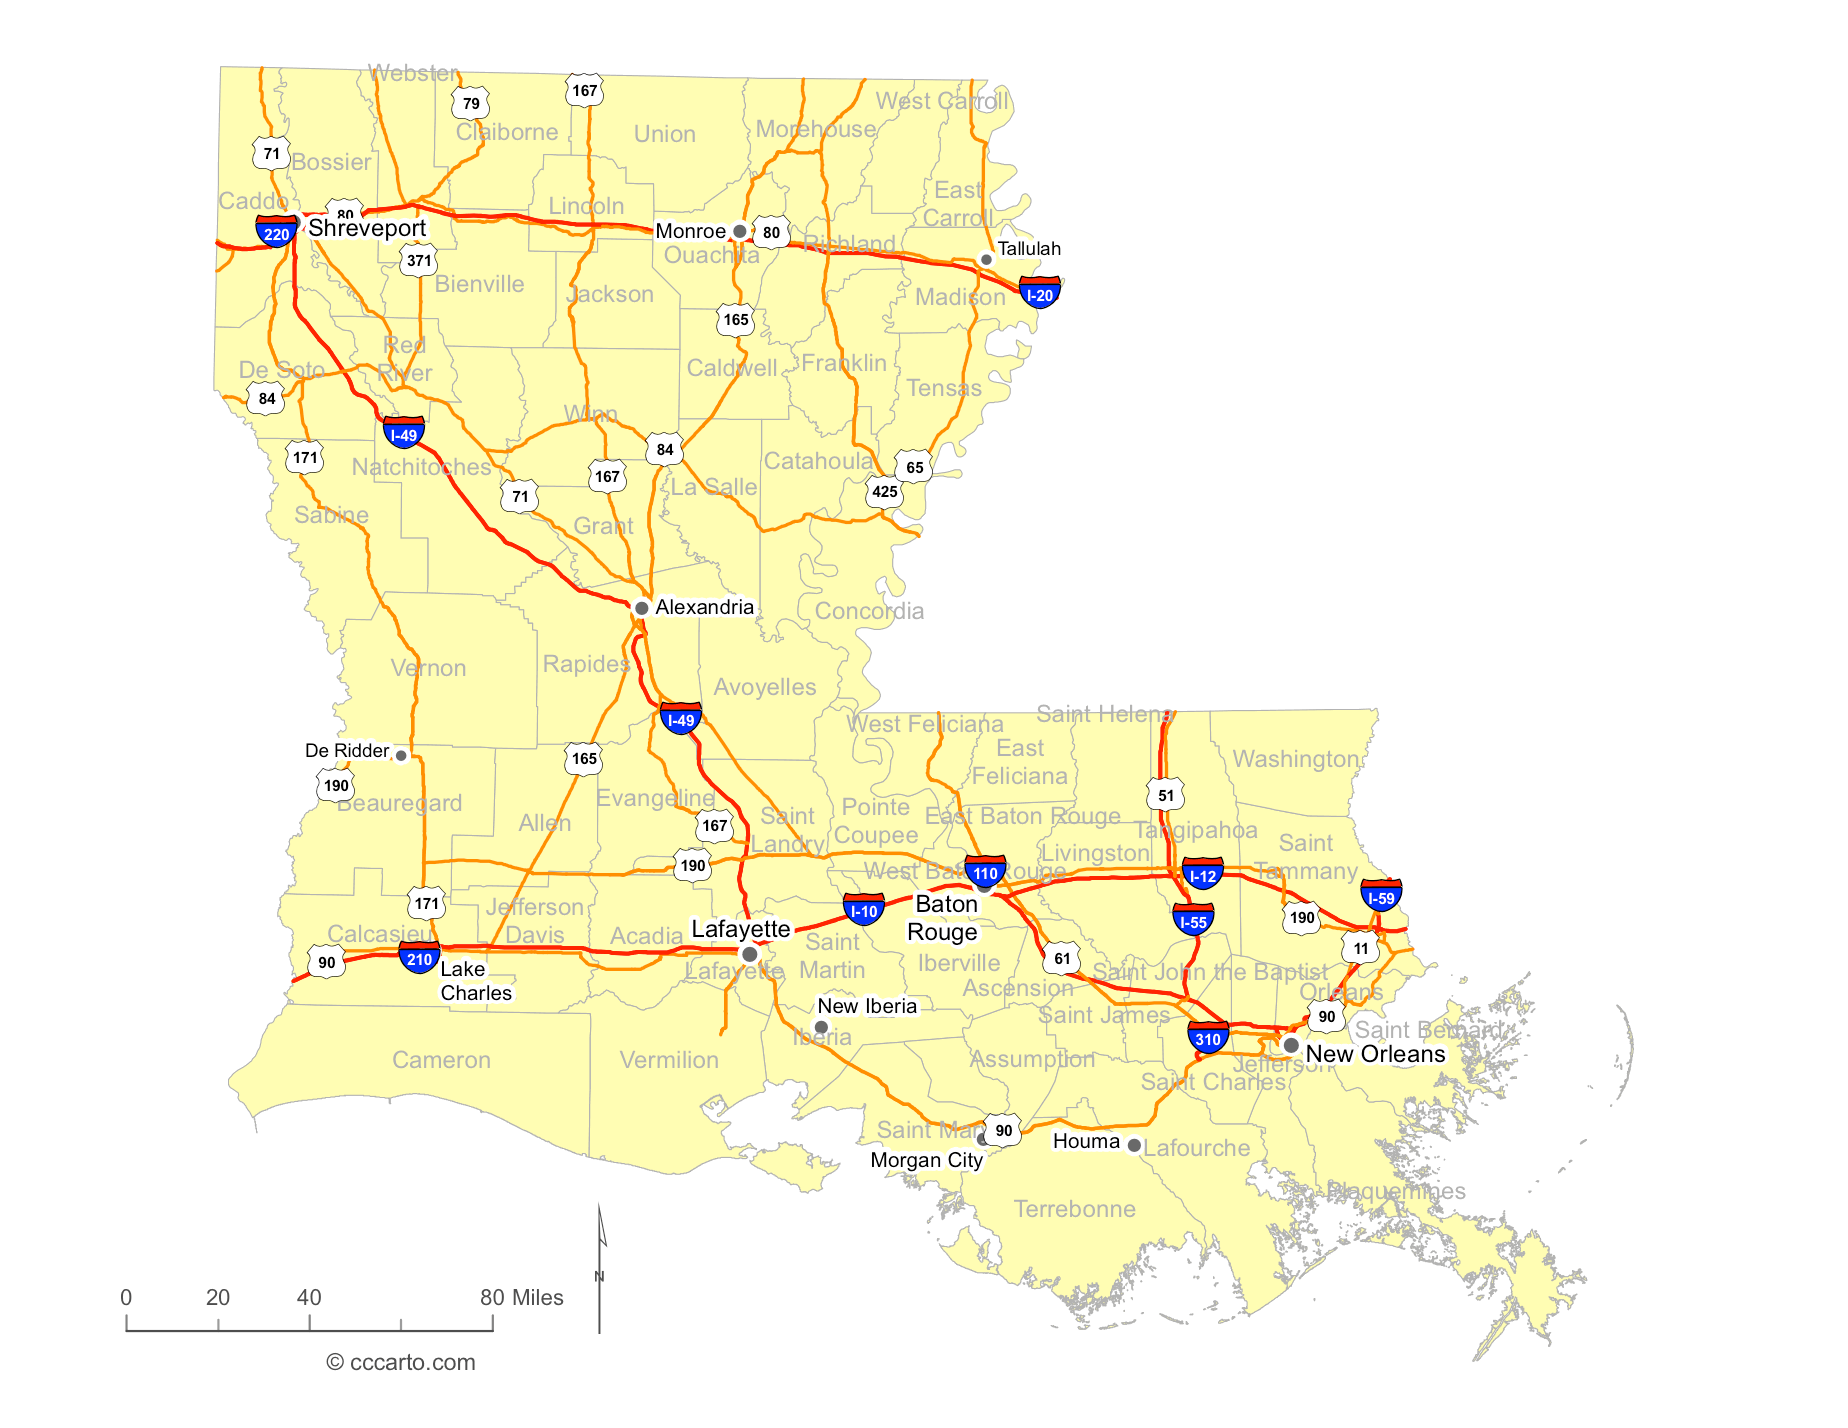 Map of Louisiana Cities - Louisiana Interstates, Highways Road Map - www.bagsaleusa.com/product-category/twist-bag/